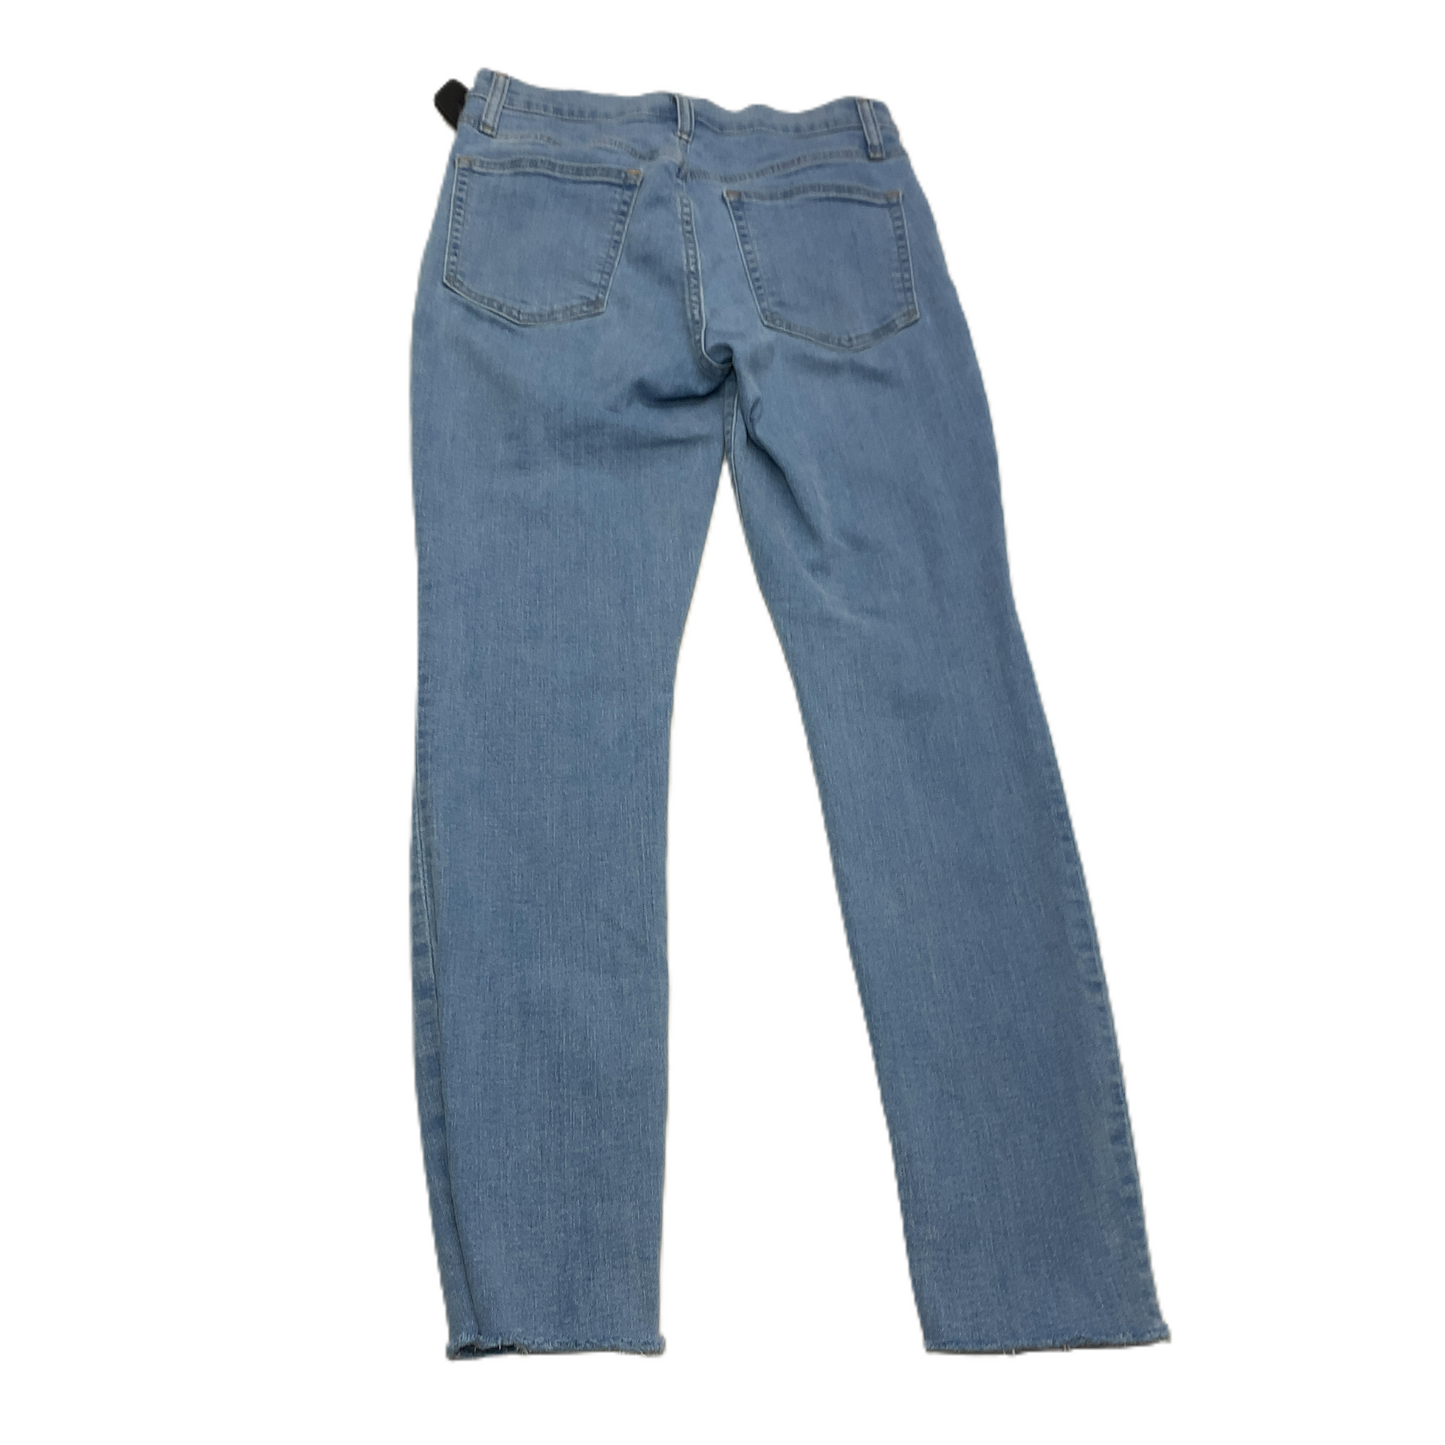 Jeans Skinny By Gap  Size: 6